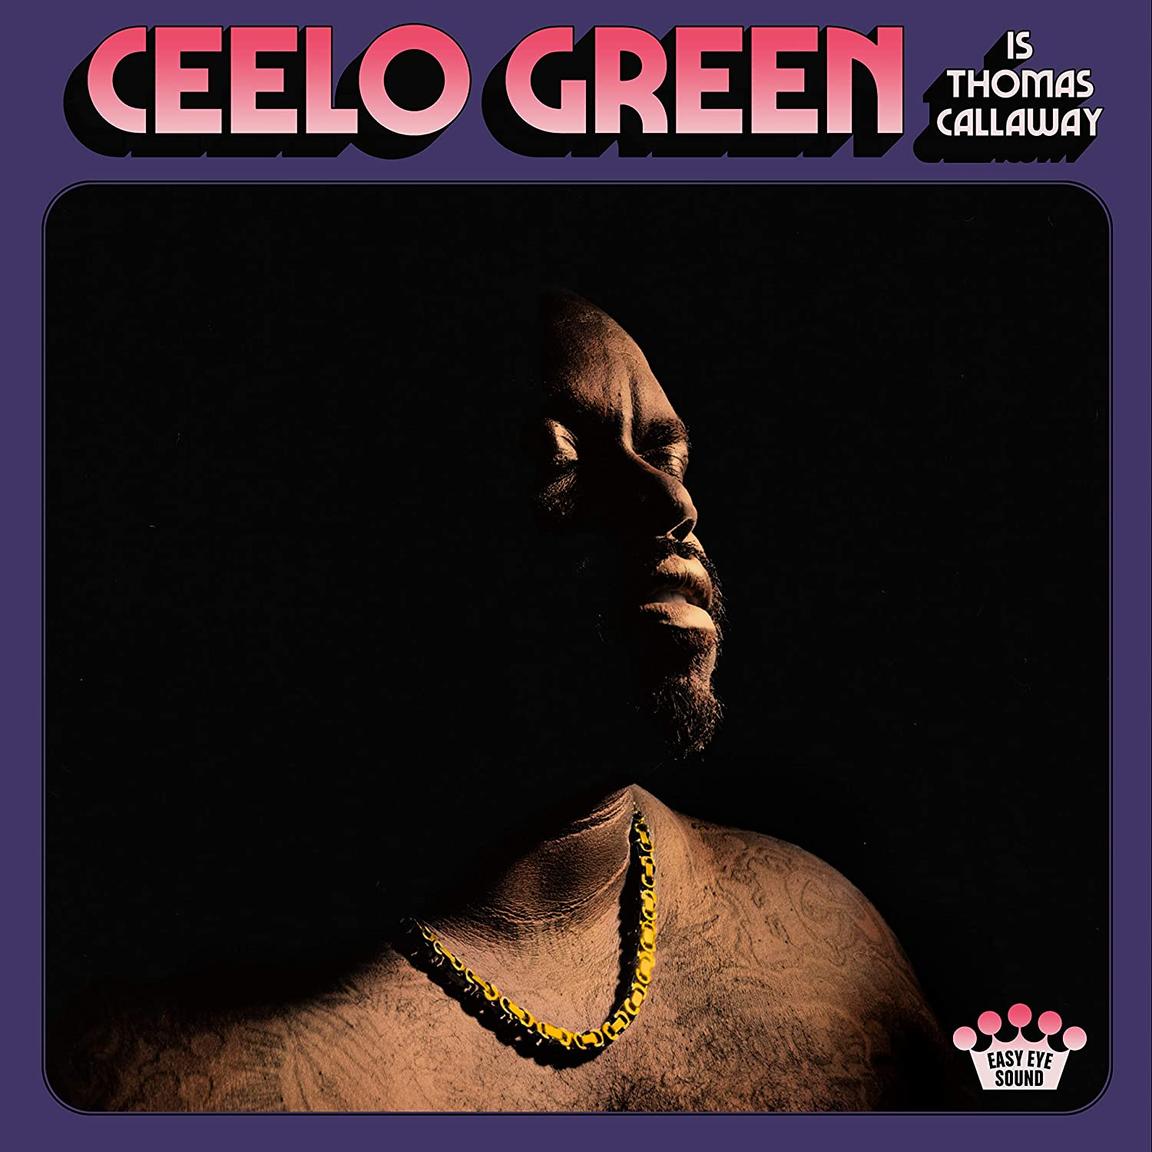 CeeLo Green / CeeLo Green Is Thomas Callaway